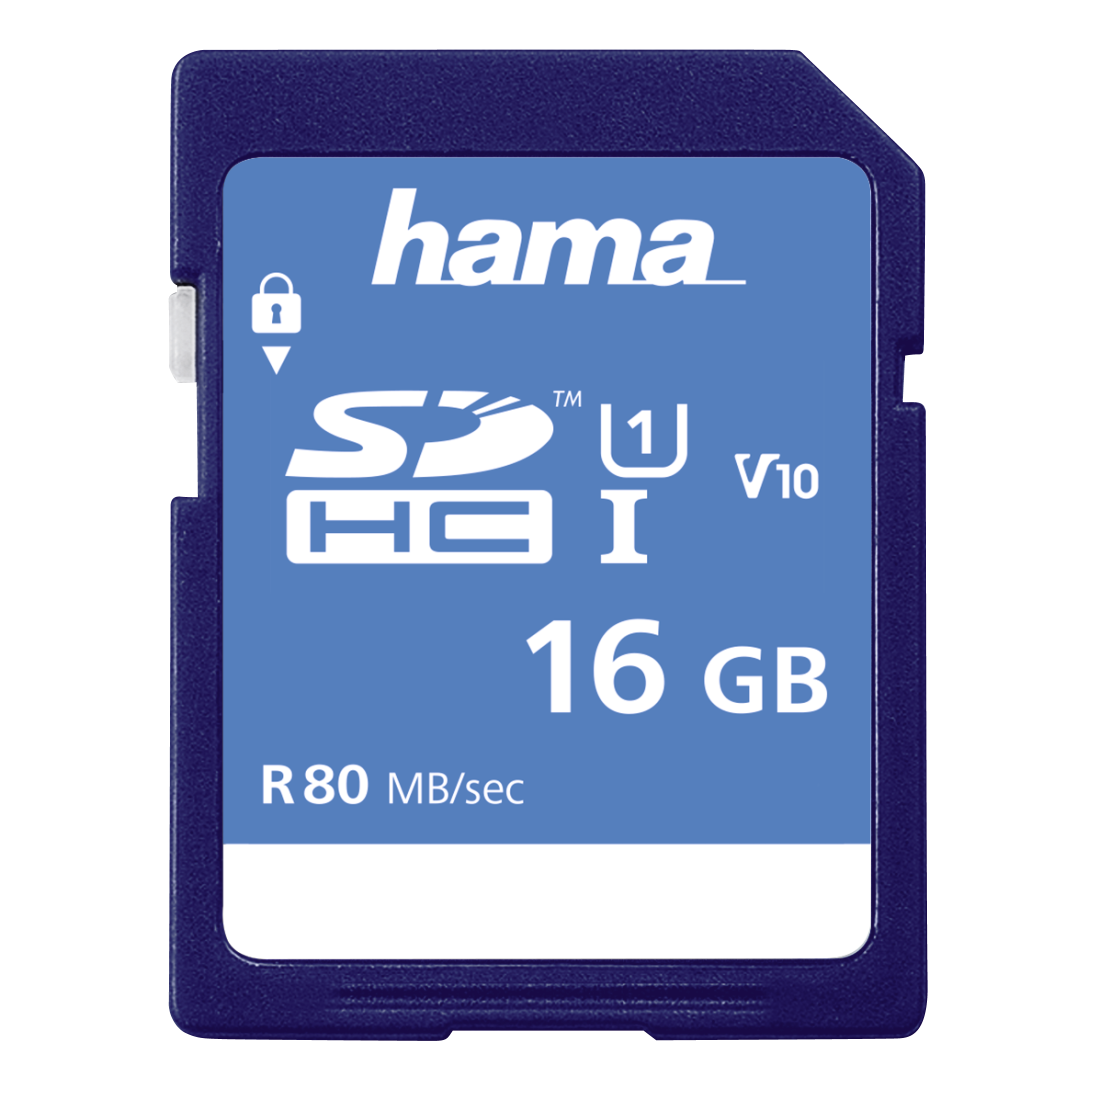 Hama 16GB Class 10 SDHC, UHS-I 80MBs